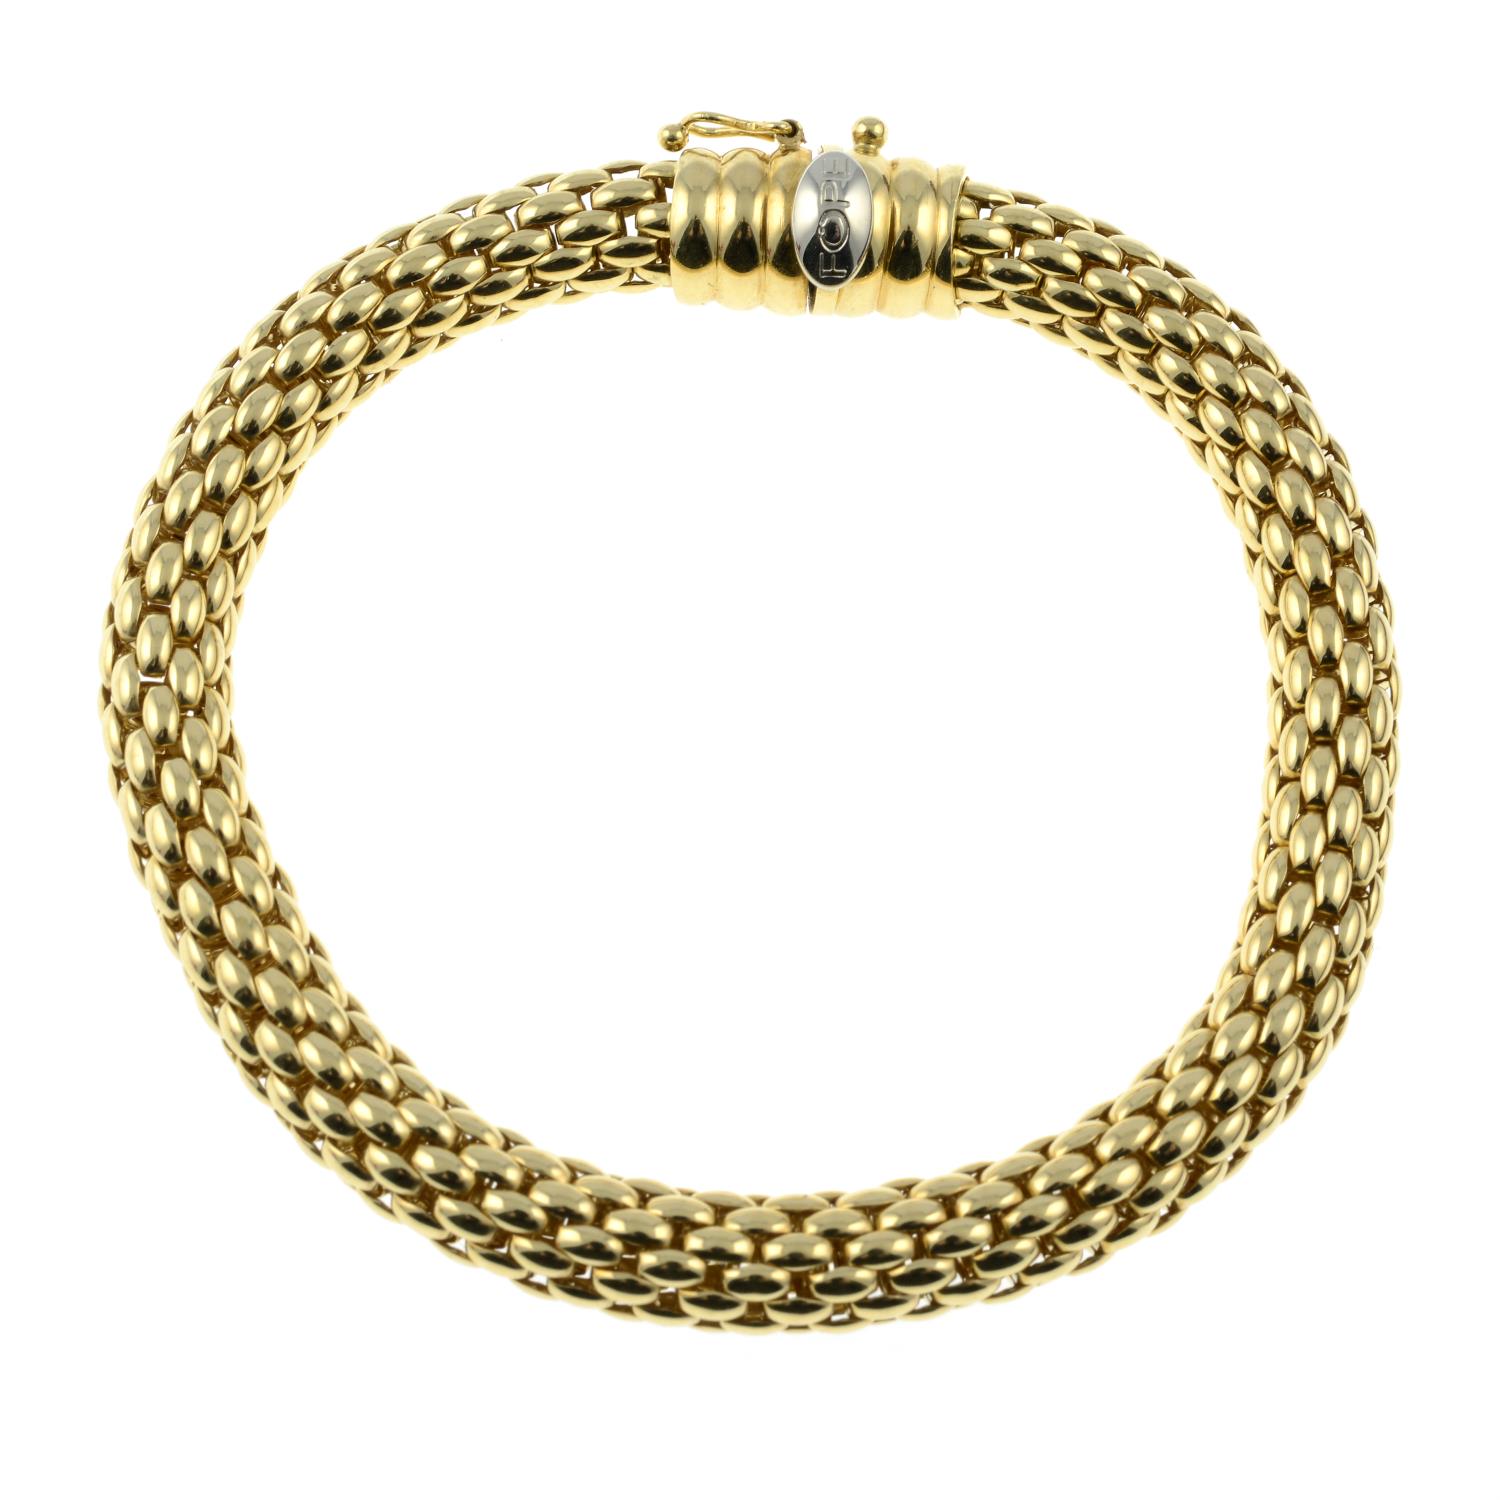 An 18ct gold 'Flex'it' bracelet, by Fope. - Image 3 of 3